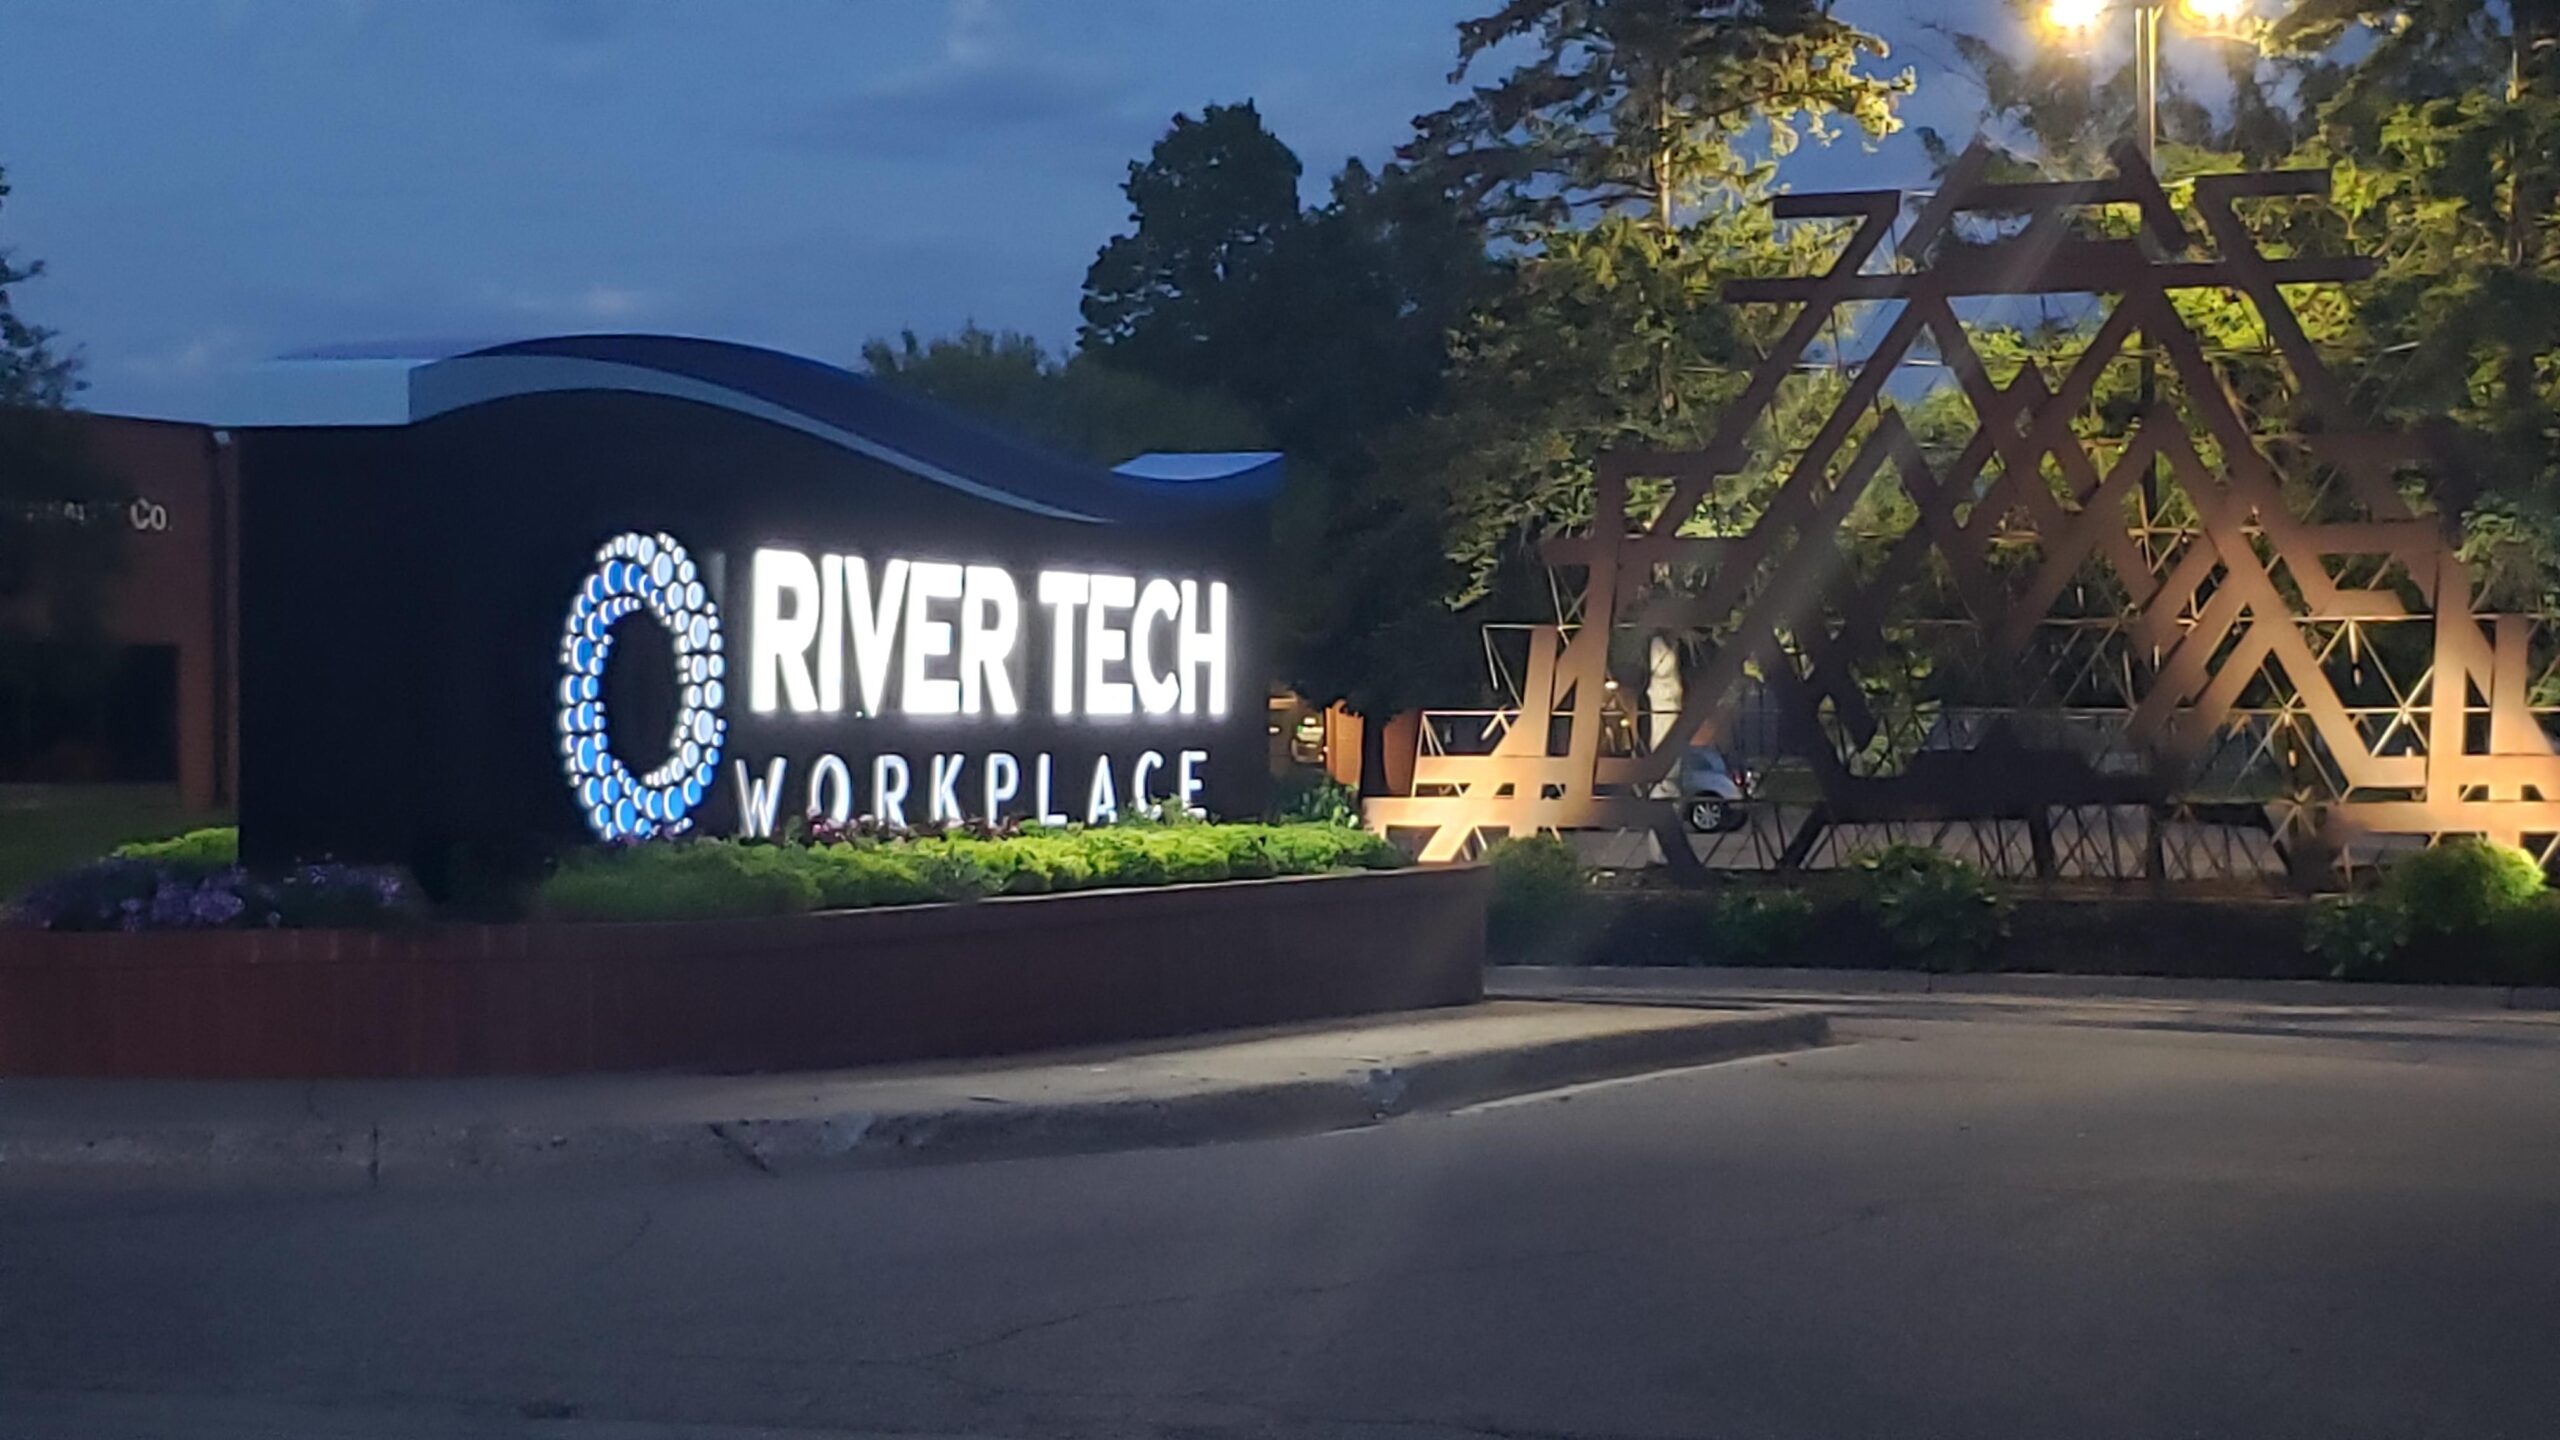 River tech workplace